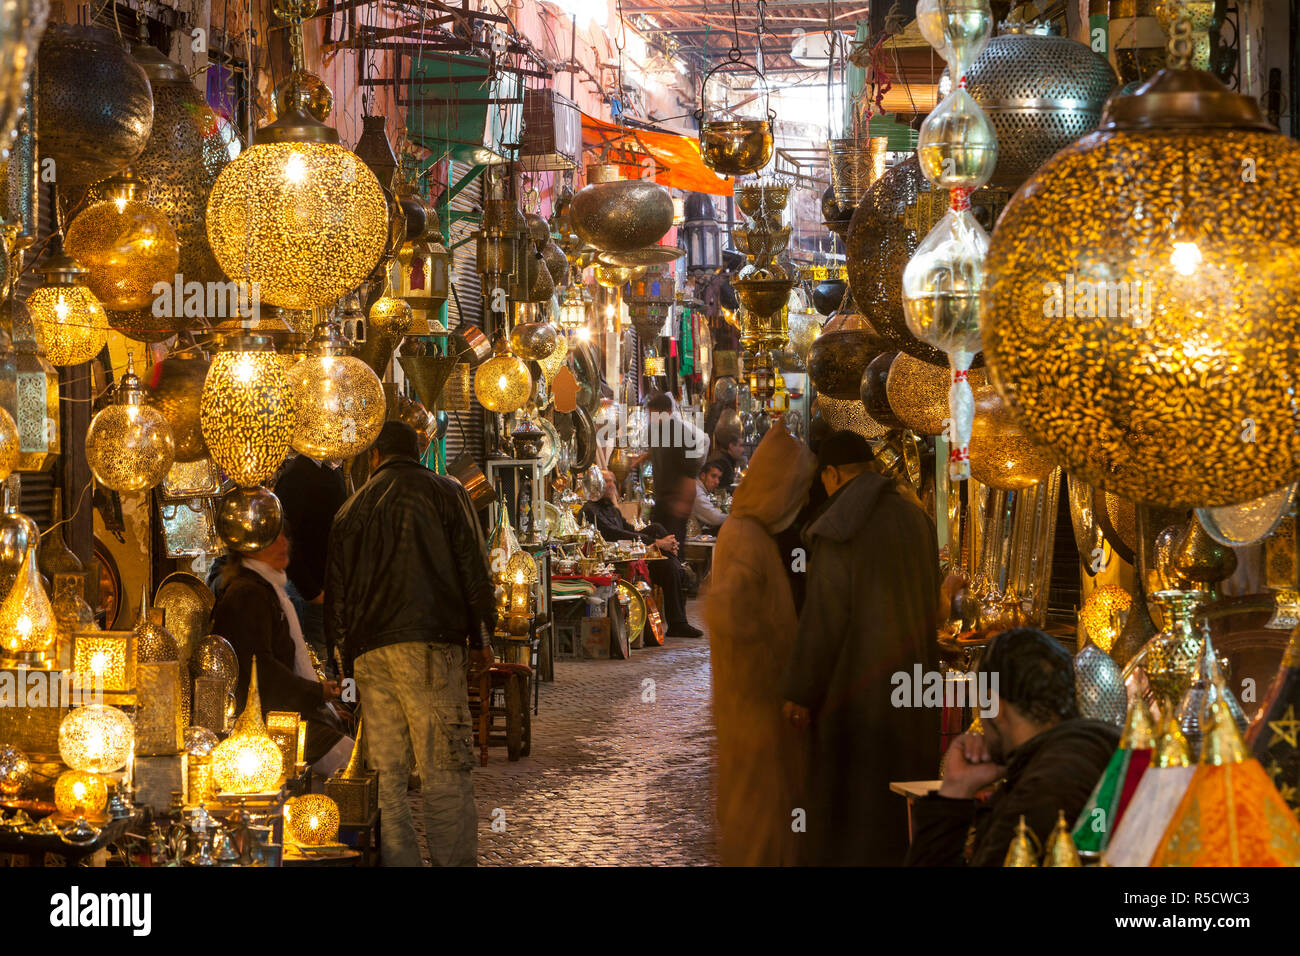 Im Souk, Marrakesch, Marokko, Nordafrika, Afrika Stockfoto